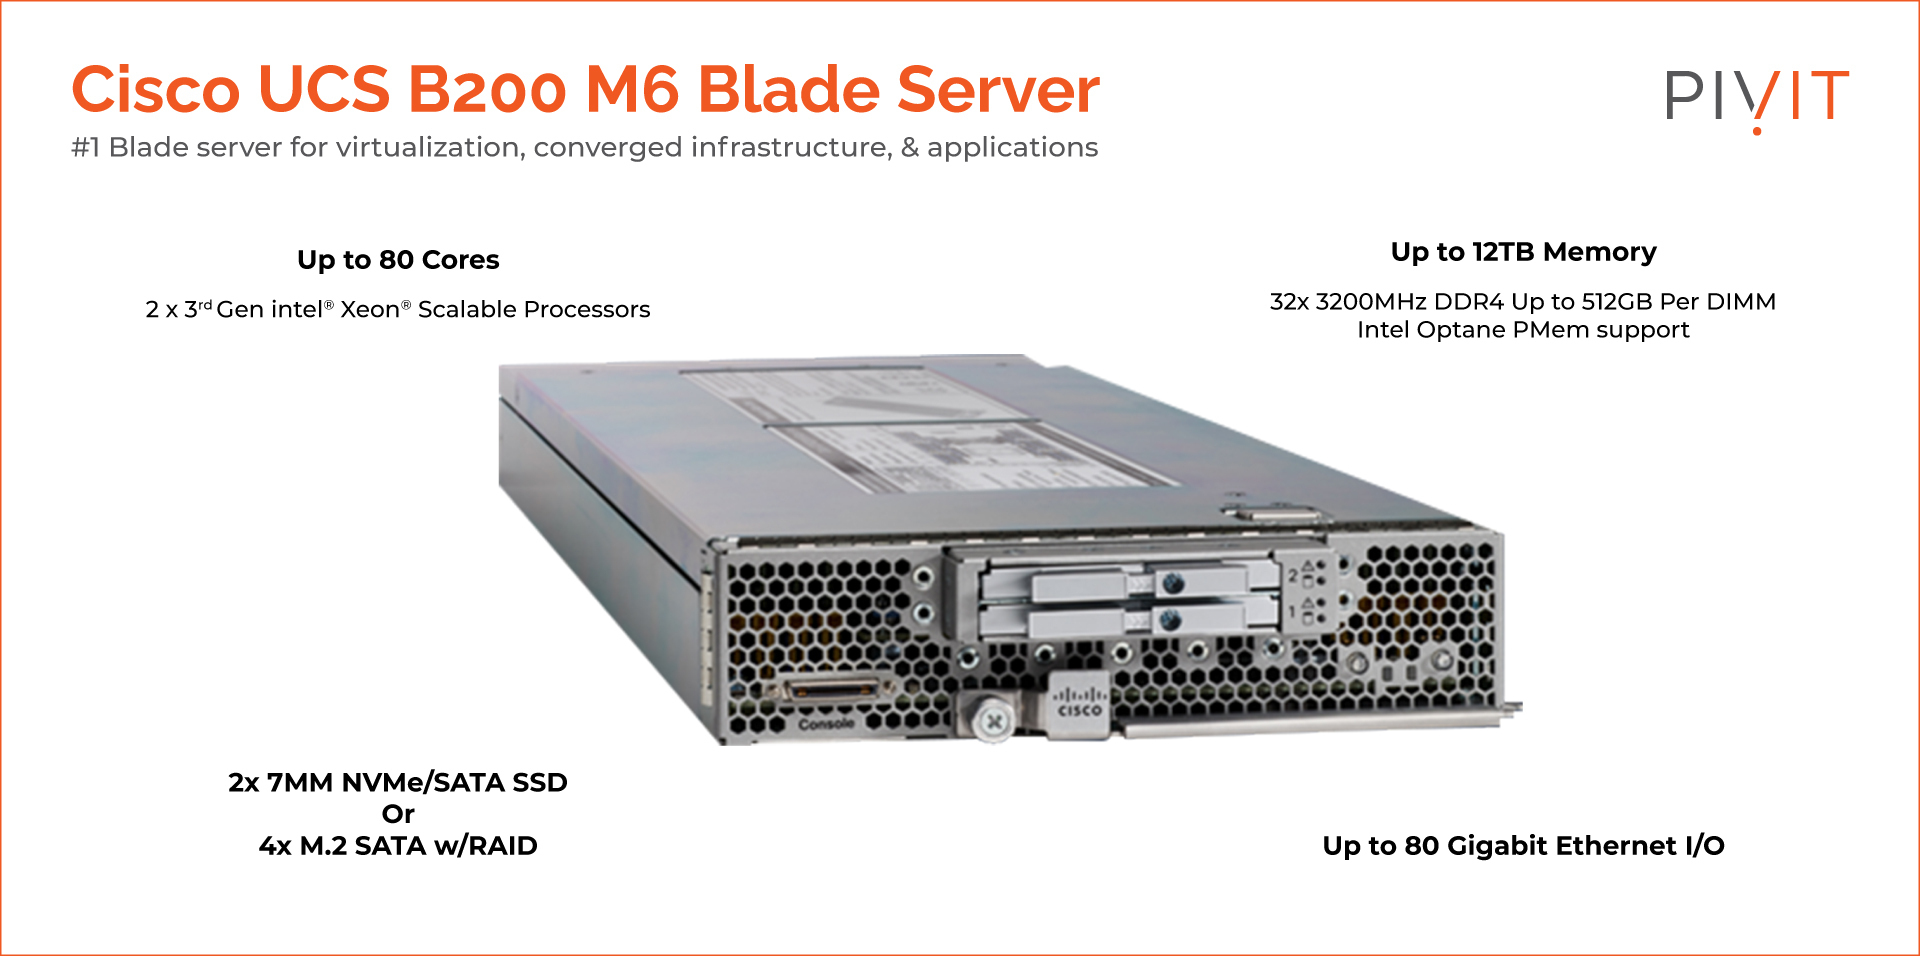 Cisco UCS B200 M6 blade server specifications